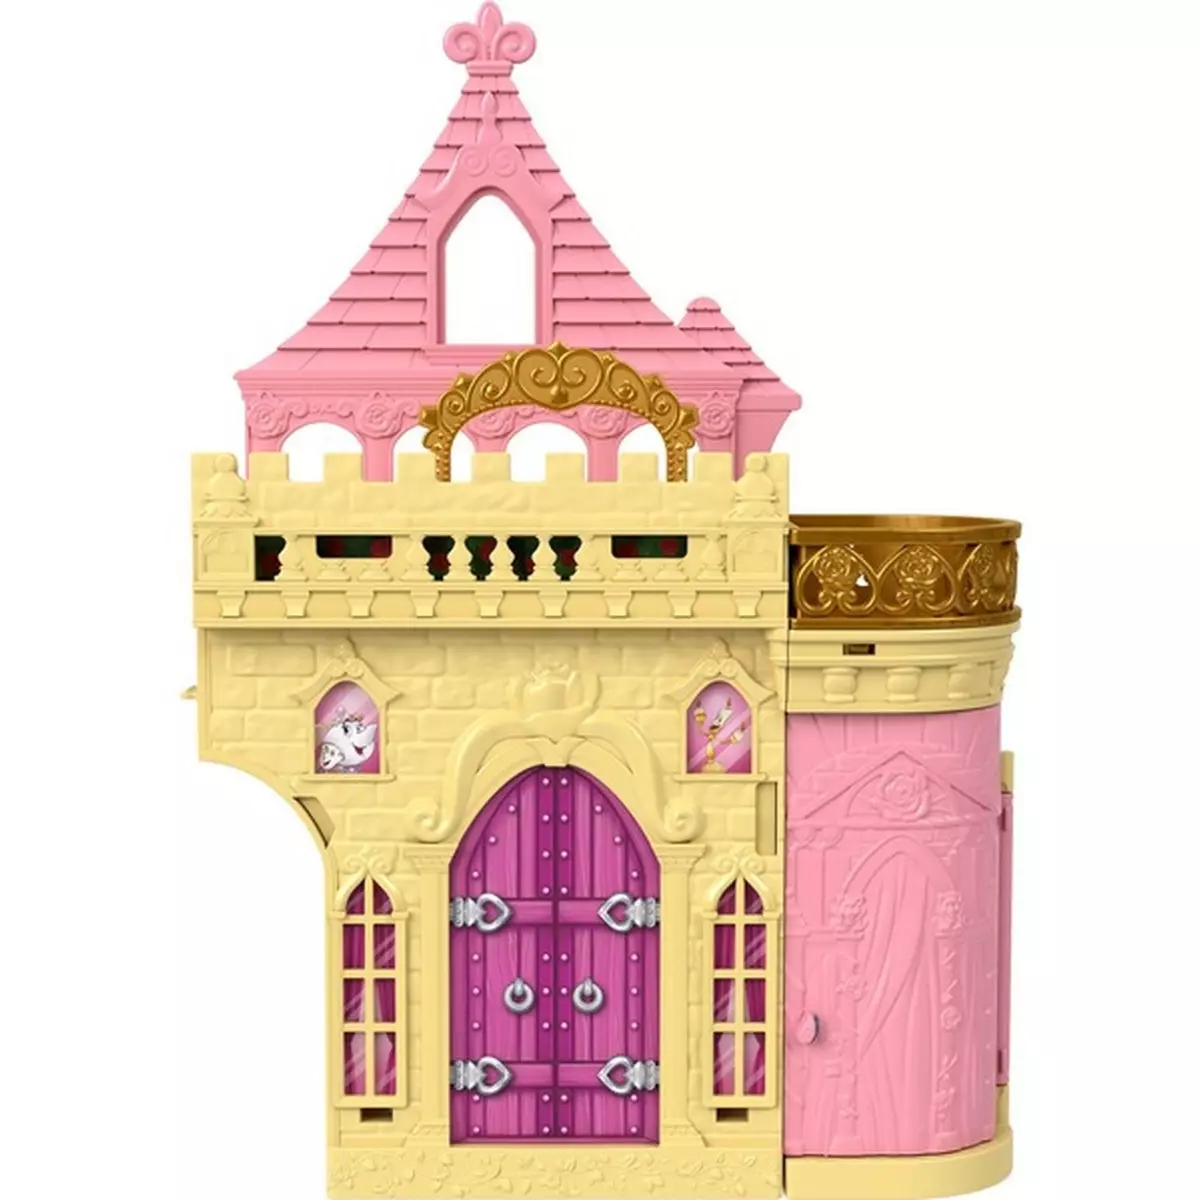 DISNEY PRINCESS Château de Belle Disney Princess